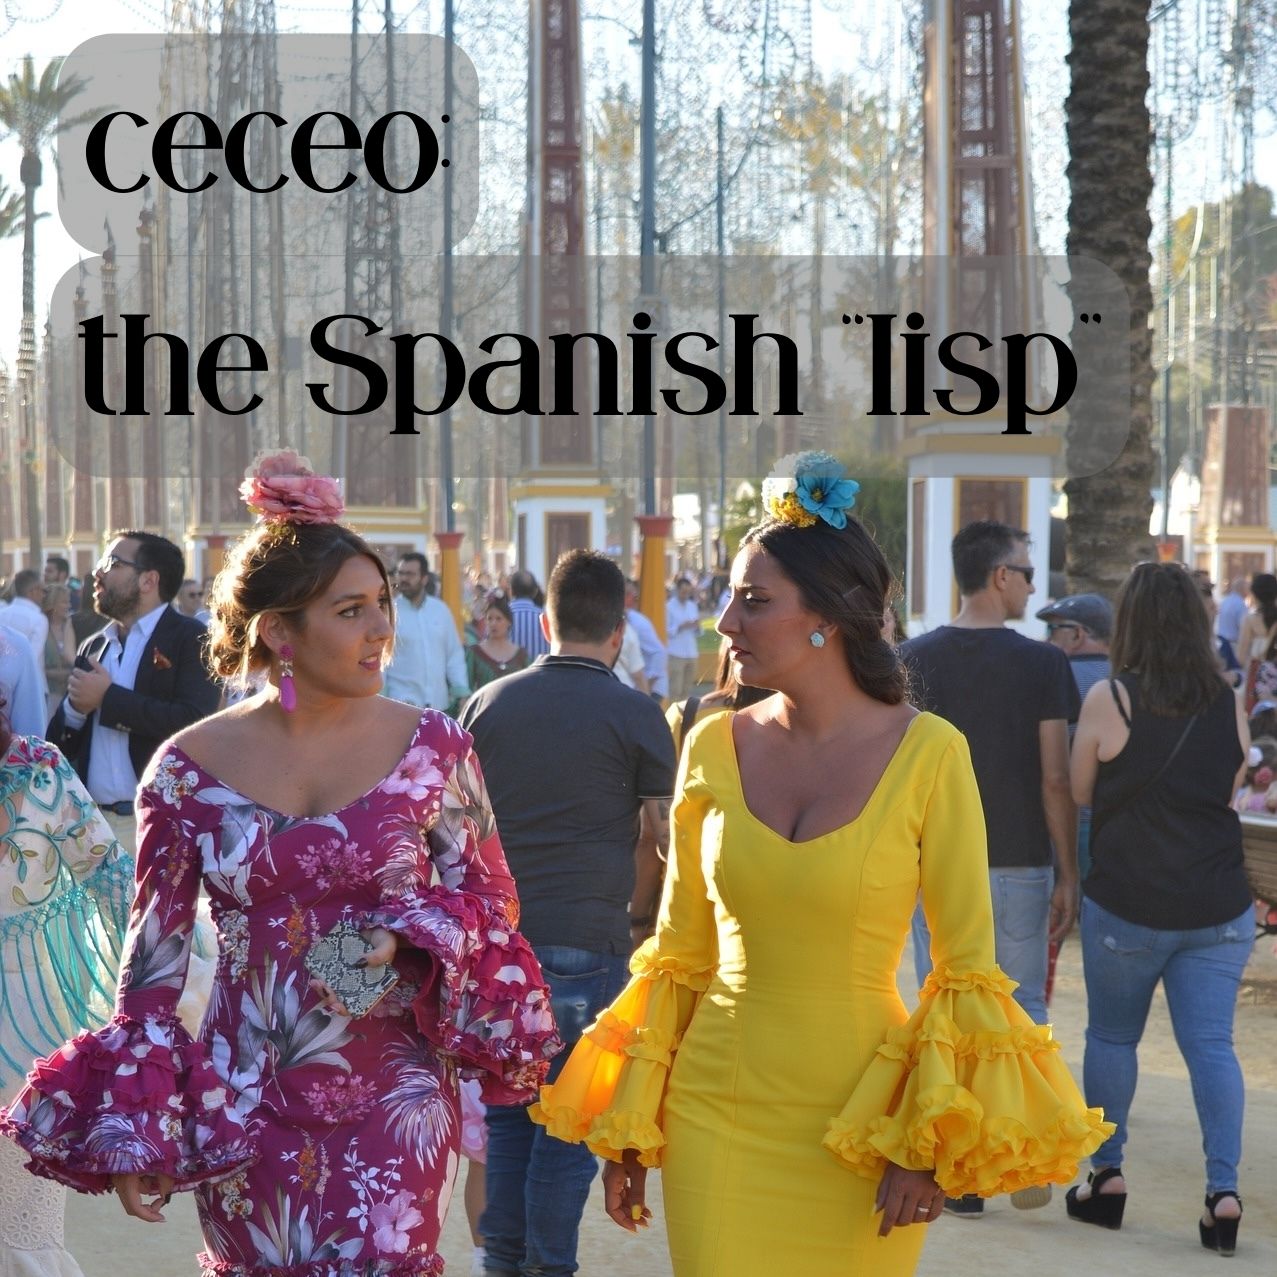 Ceceo: Explaining the Spanish lisp